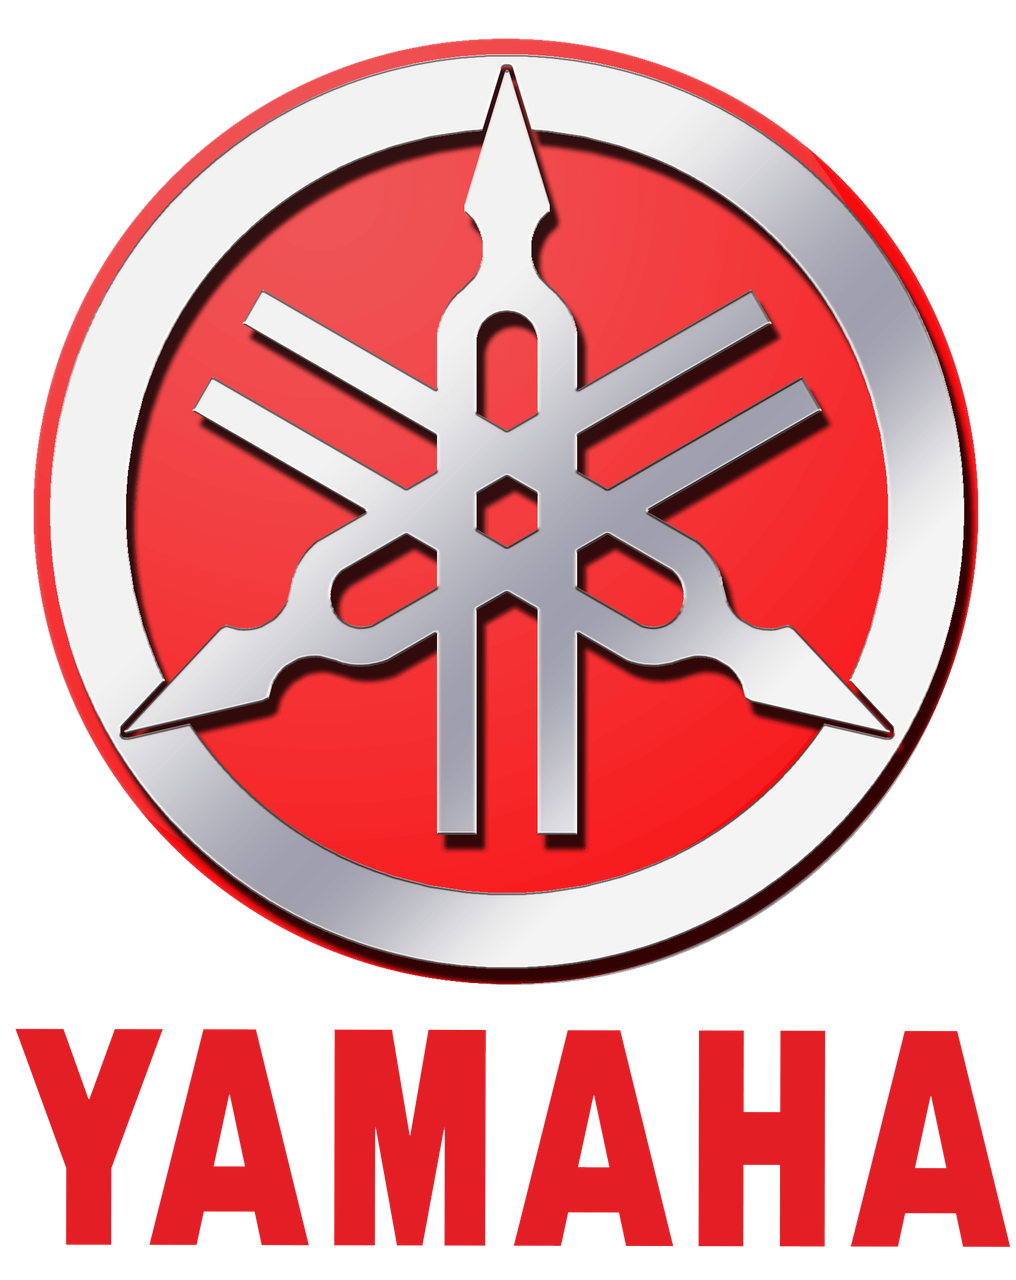 Yamaha Y E8 Enduro Стаканчик помпы 6504432201